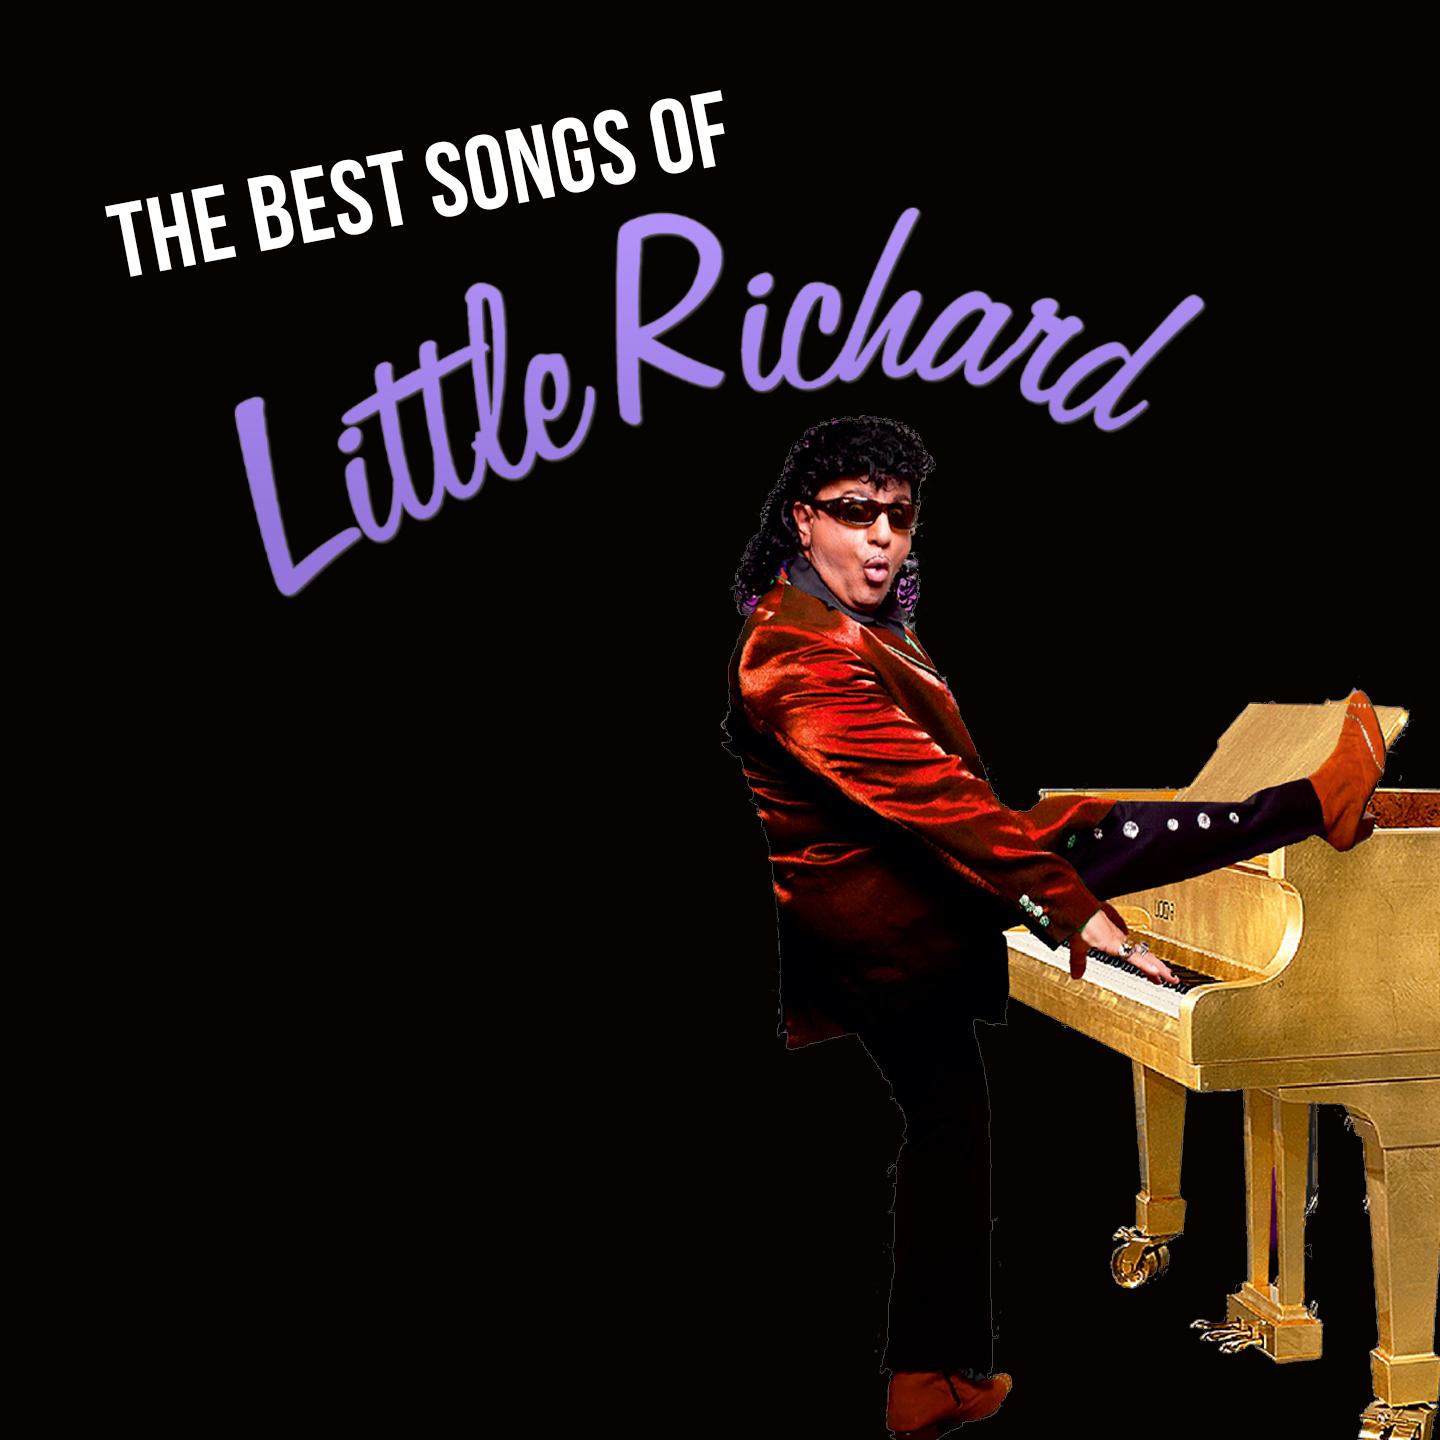 The Best Songs of Little Richard